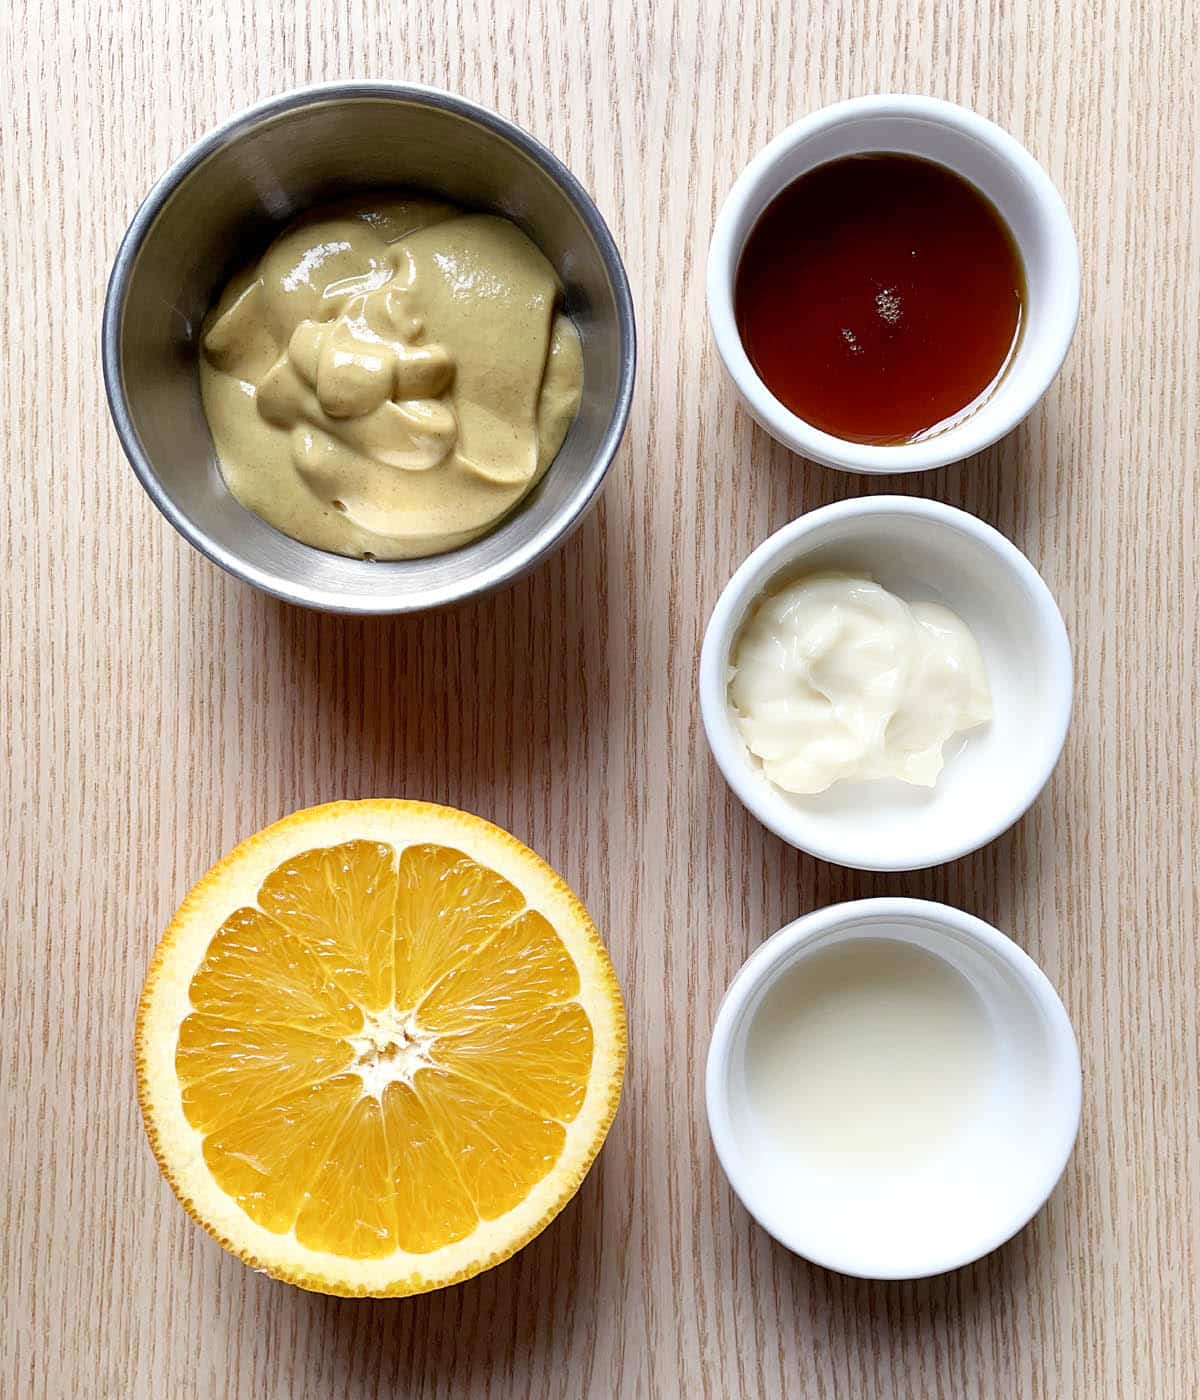 Half an orange, a metal bowl containing mustard, a white bowl containing brown honey, a white bowl containing white mayonnaise, a white bowl containing vinegar.